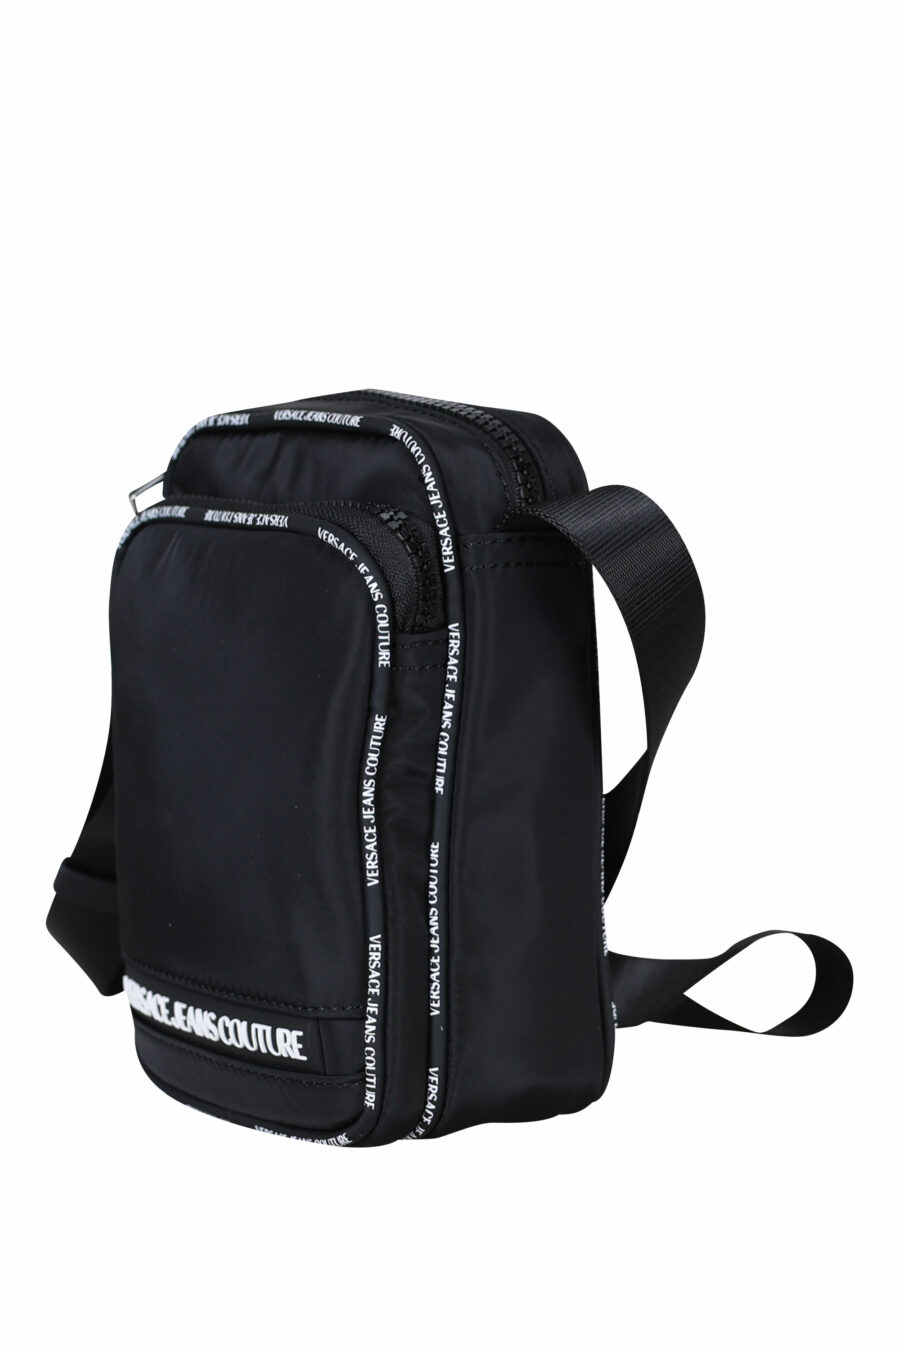 Black crossbody bag with white mini-logo "lettering" on ribbon - 8052019409307 1